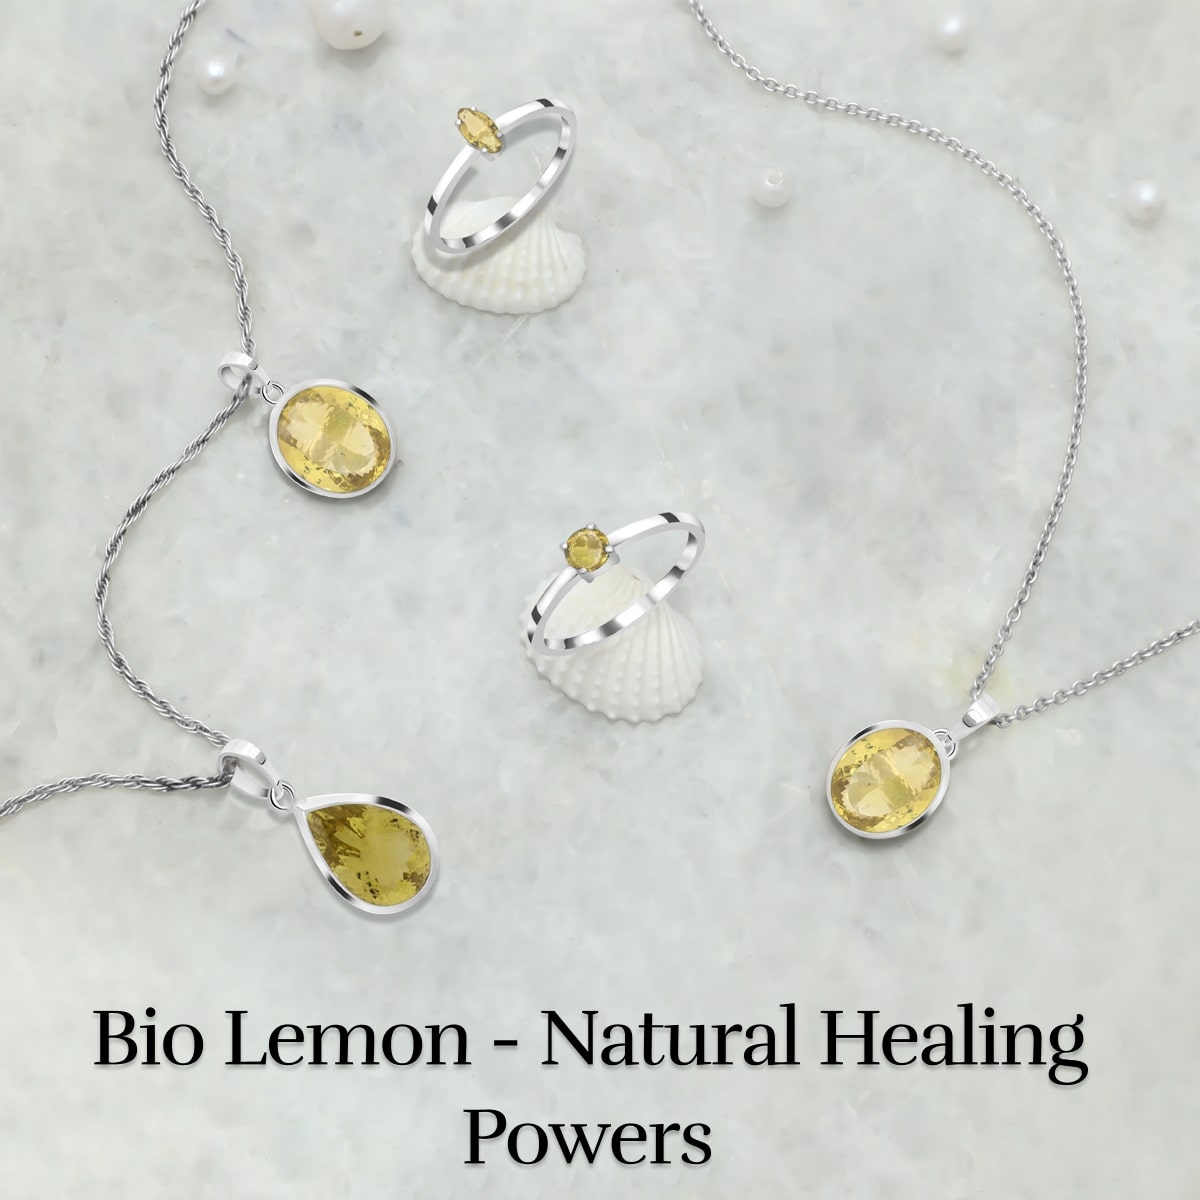 Bio Lemon Healing Properties